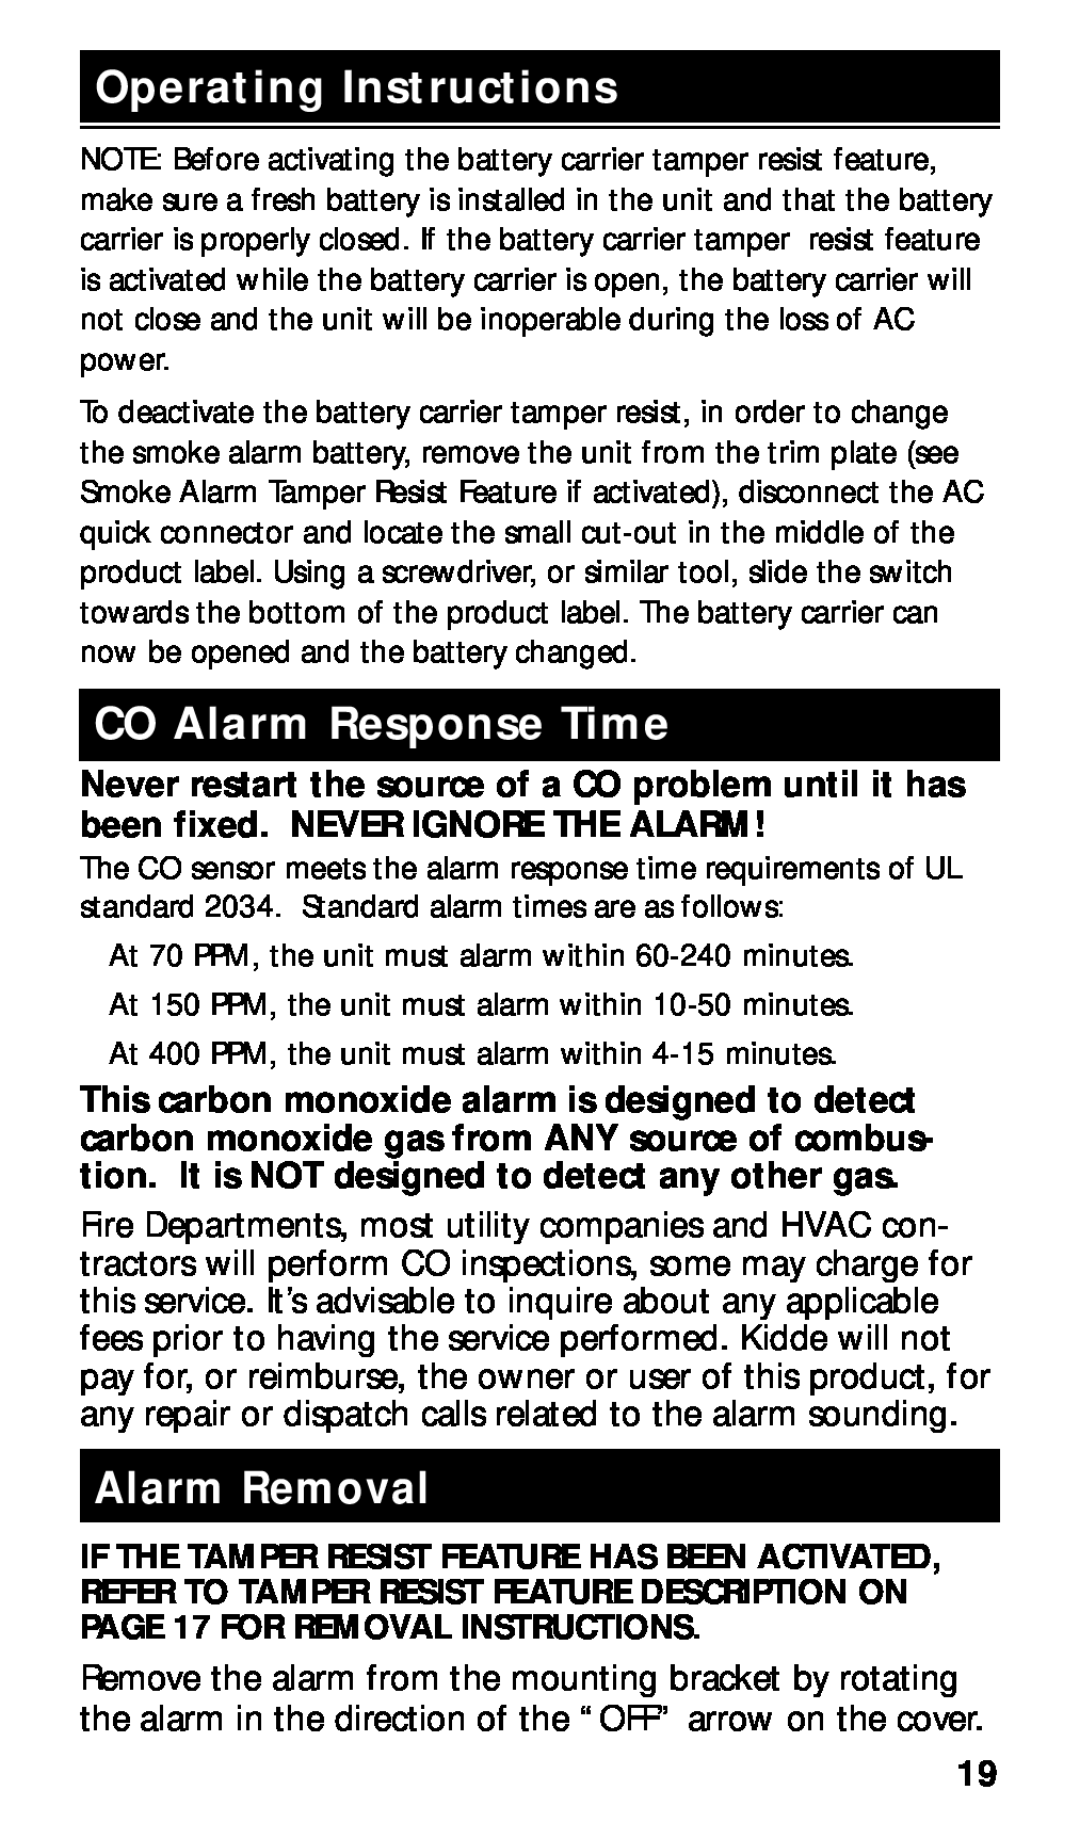 Kidde KN-COPE-I manual CO Alarm Response Time, Alarm Removal, Operating Instructions 